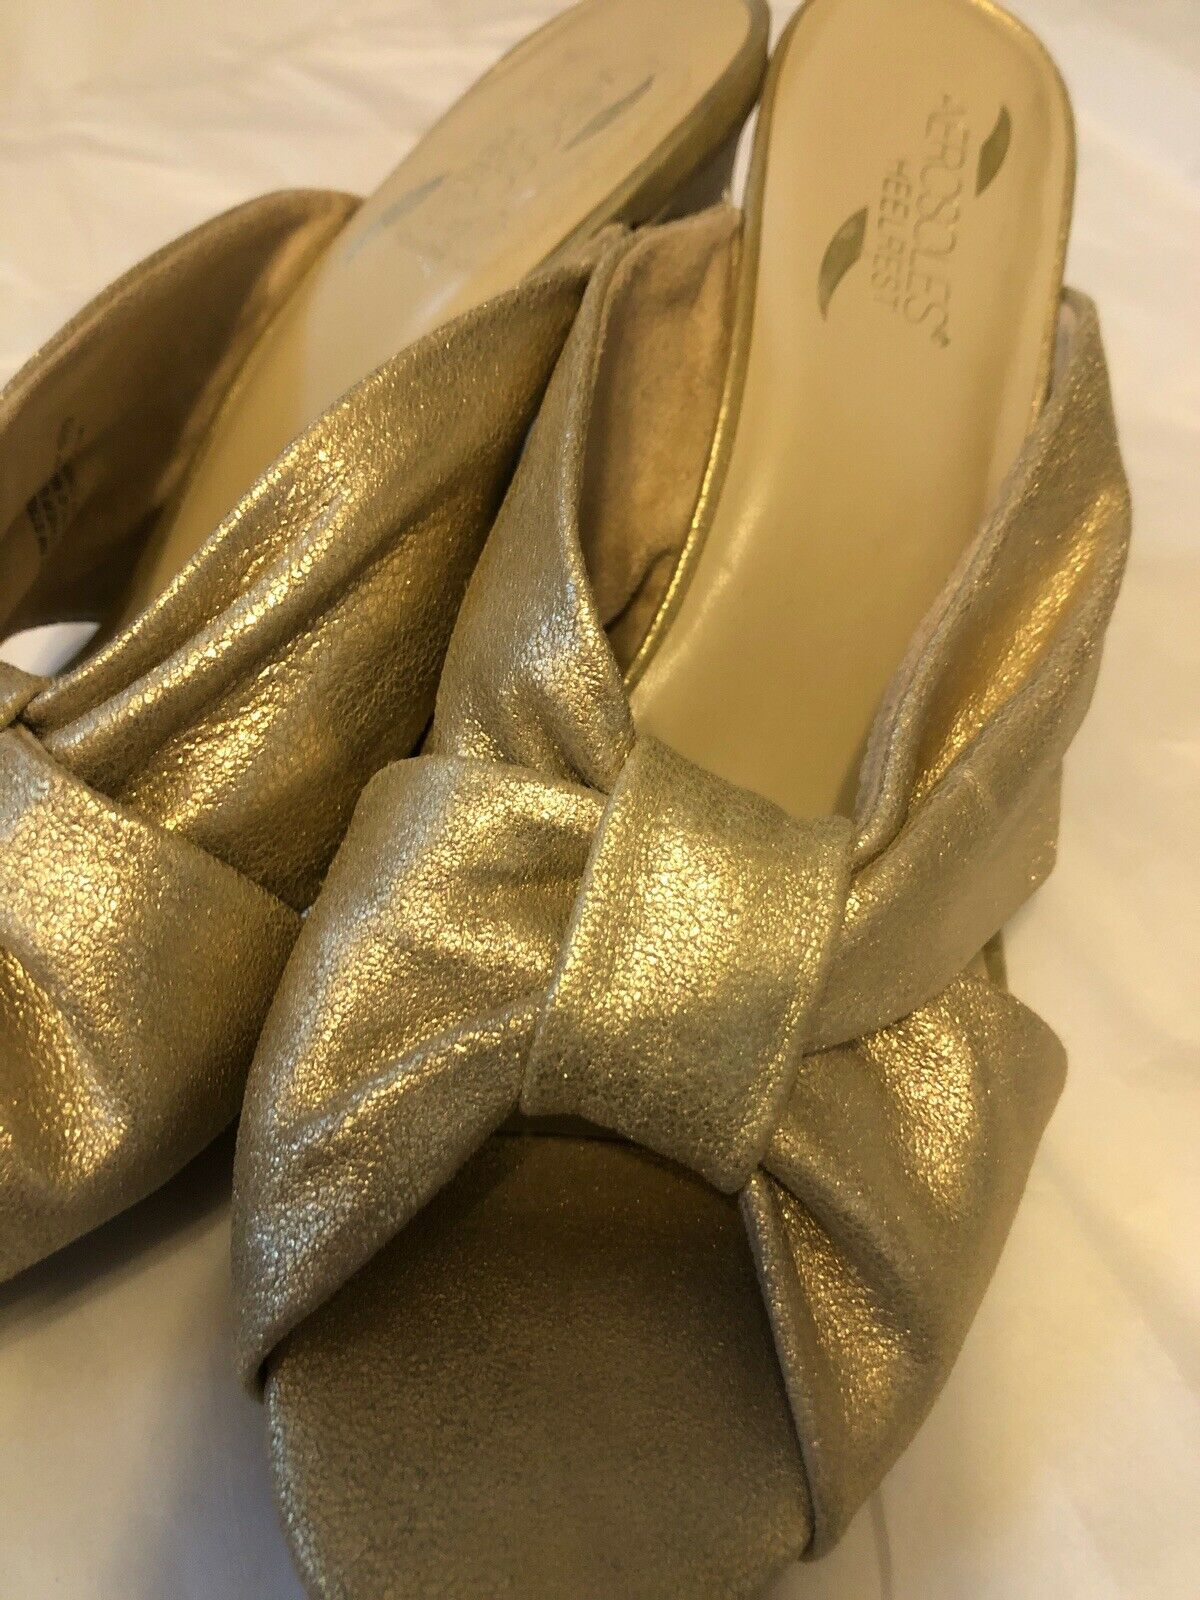 Aerosoles Street Lamp Women's Shoes Gold Metallic Size 10.5 M